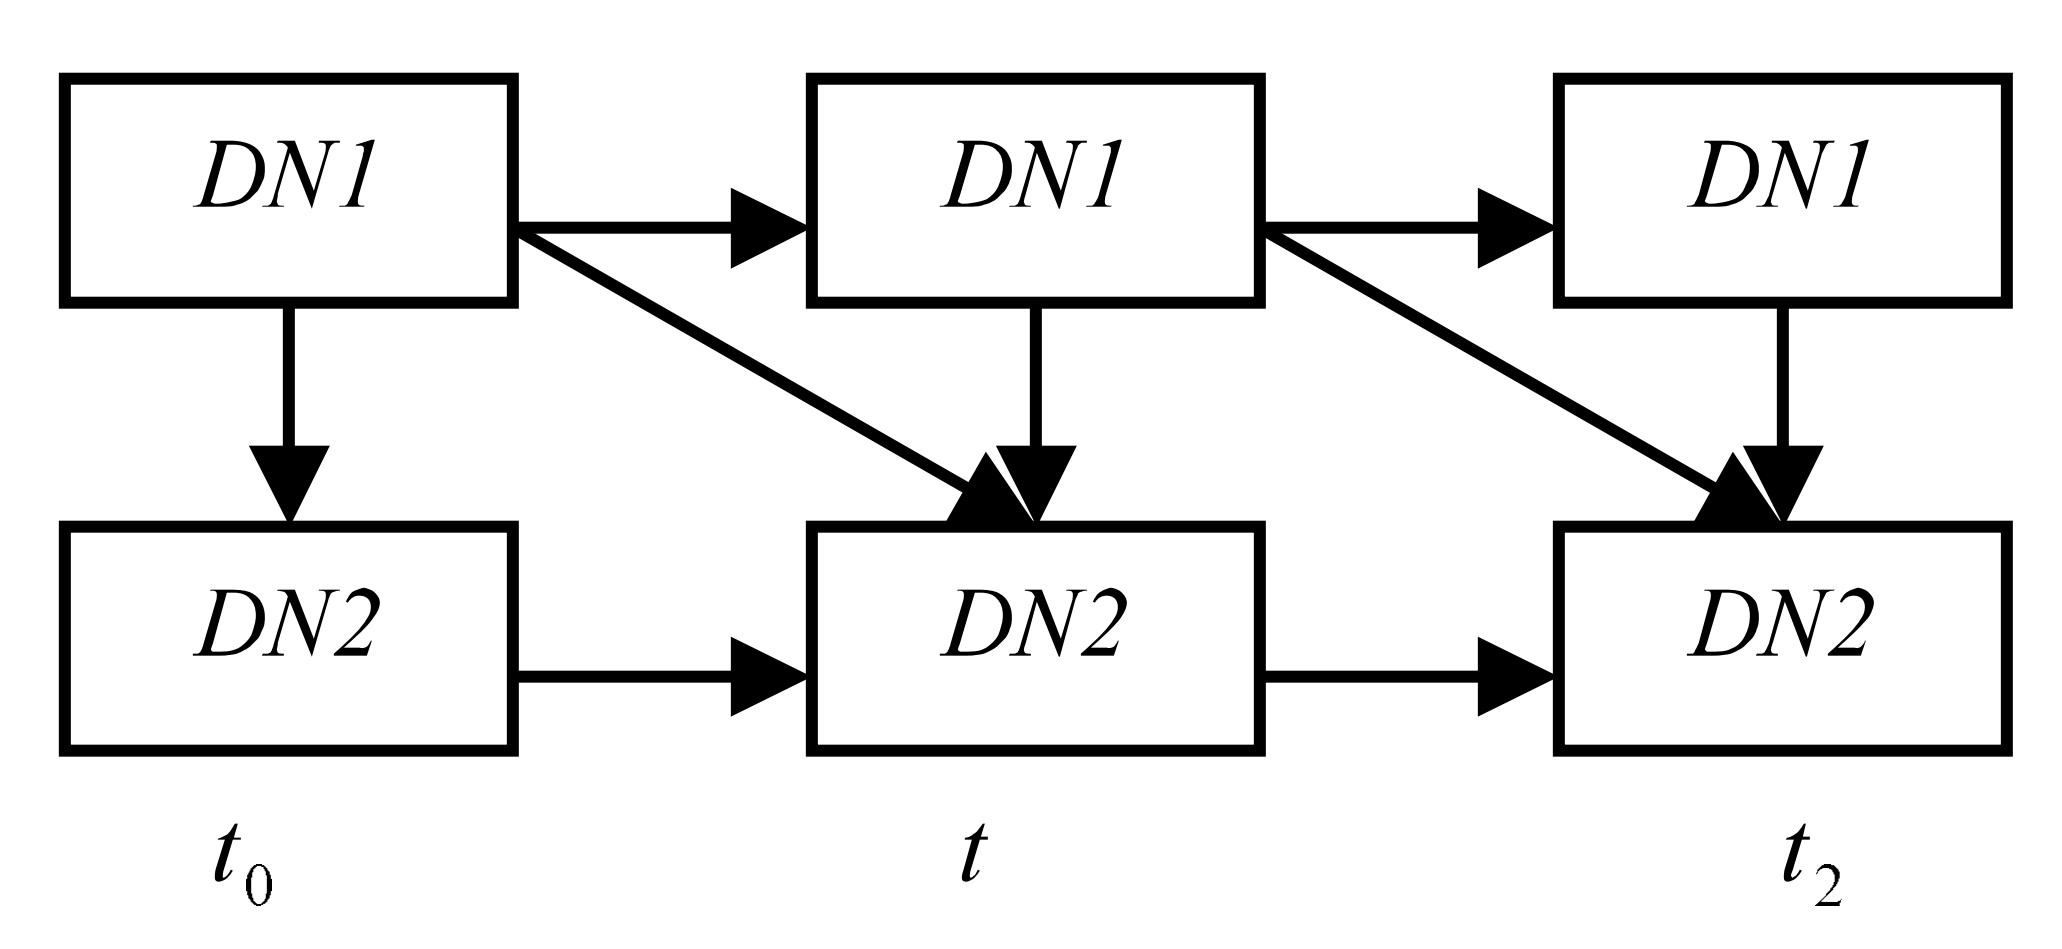 DN间依赖，DN2受到DN1在不同时刻的影响